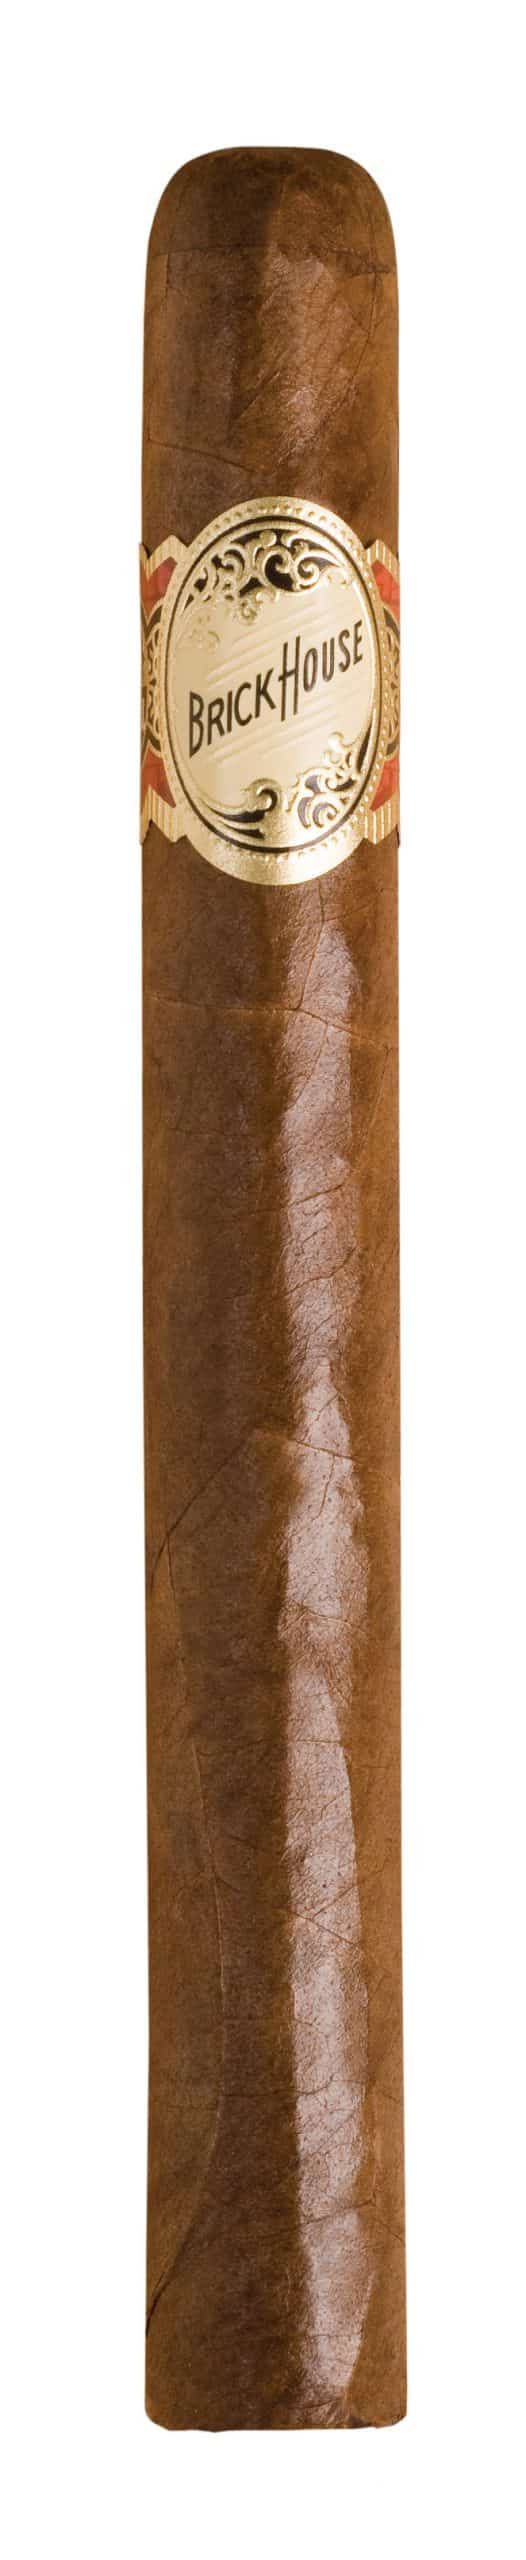 single brick house corona larga cigar